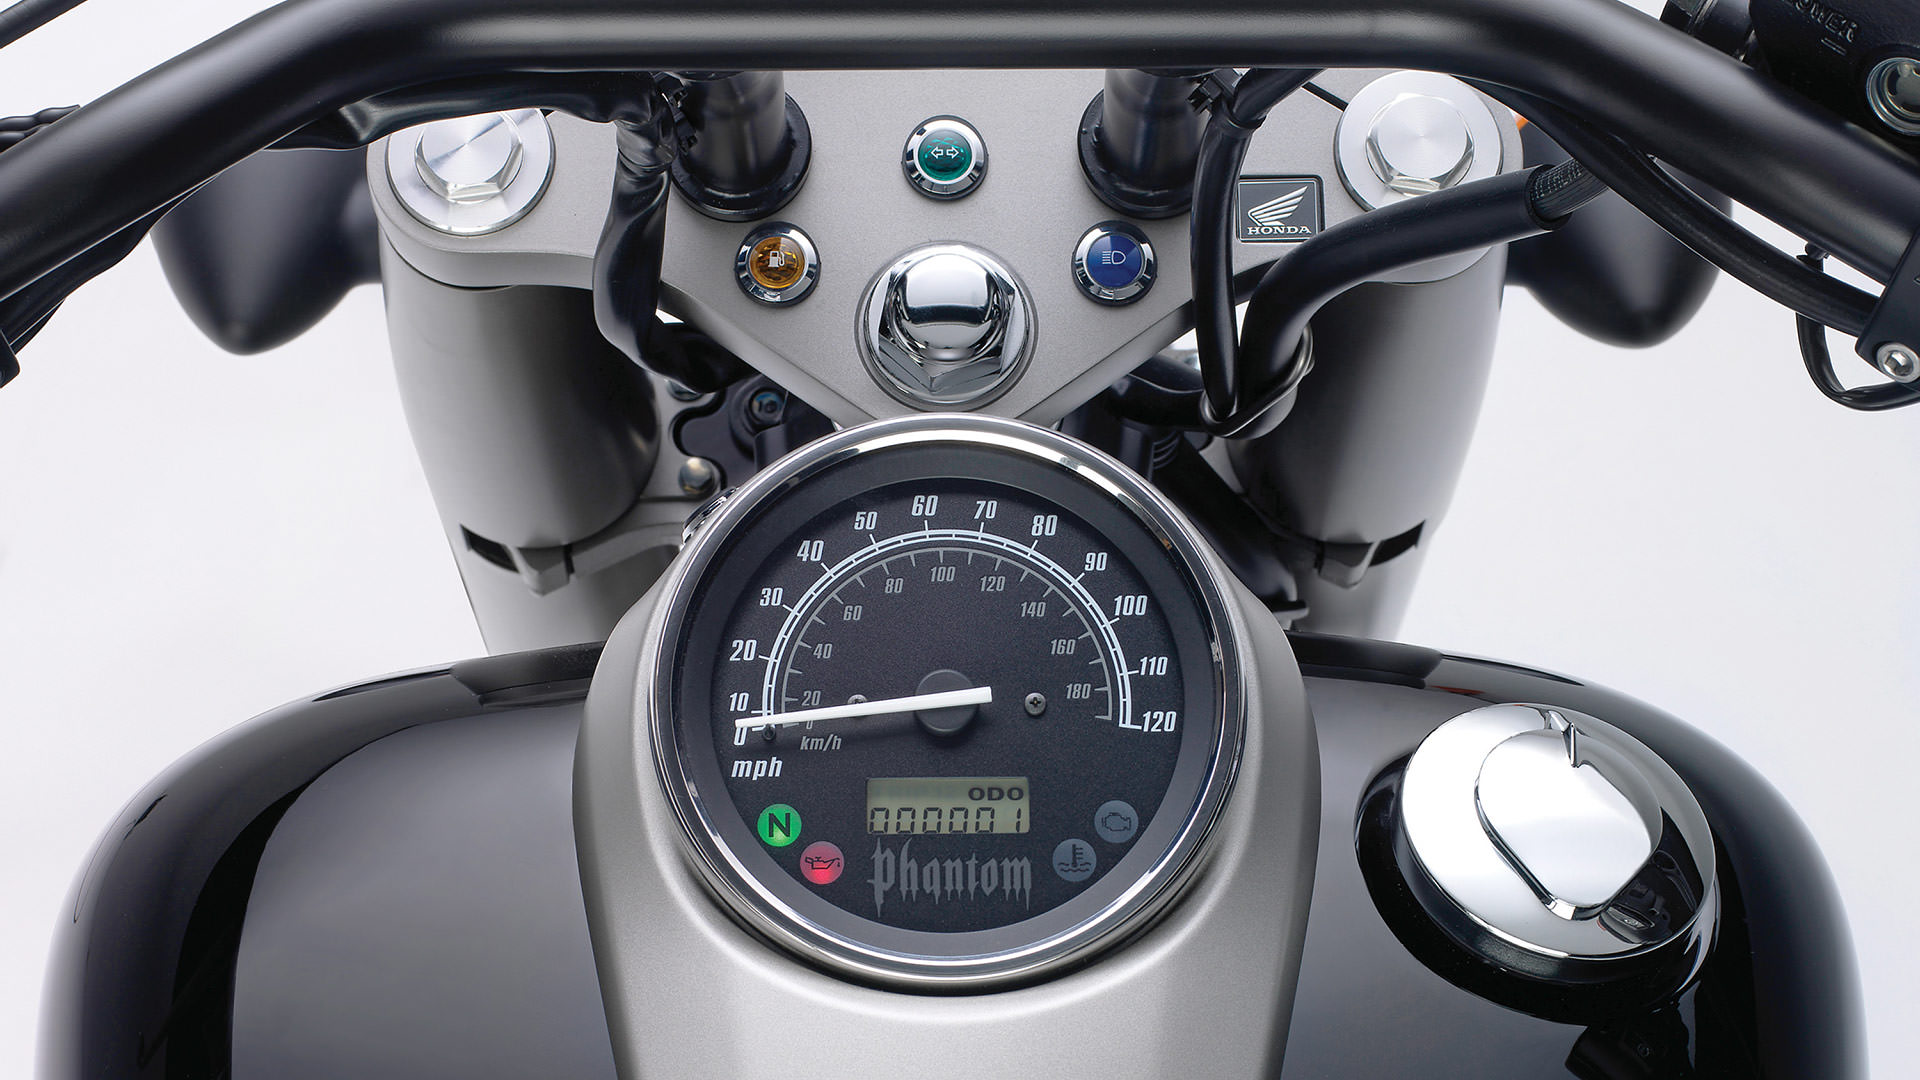 18 Honda Shadow Phantom 750 Review Of Specs Features Cruiser Motorcycle Vt750c2bj Honda Pro Kevin